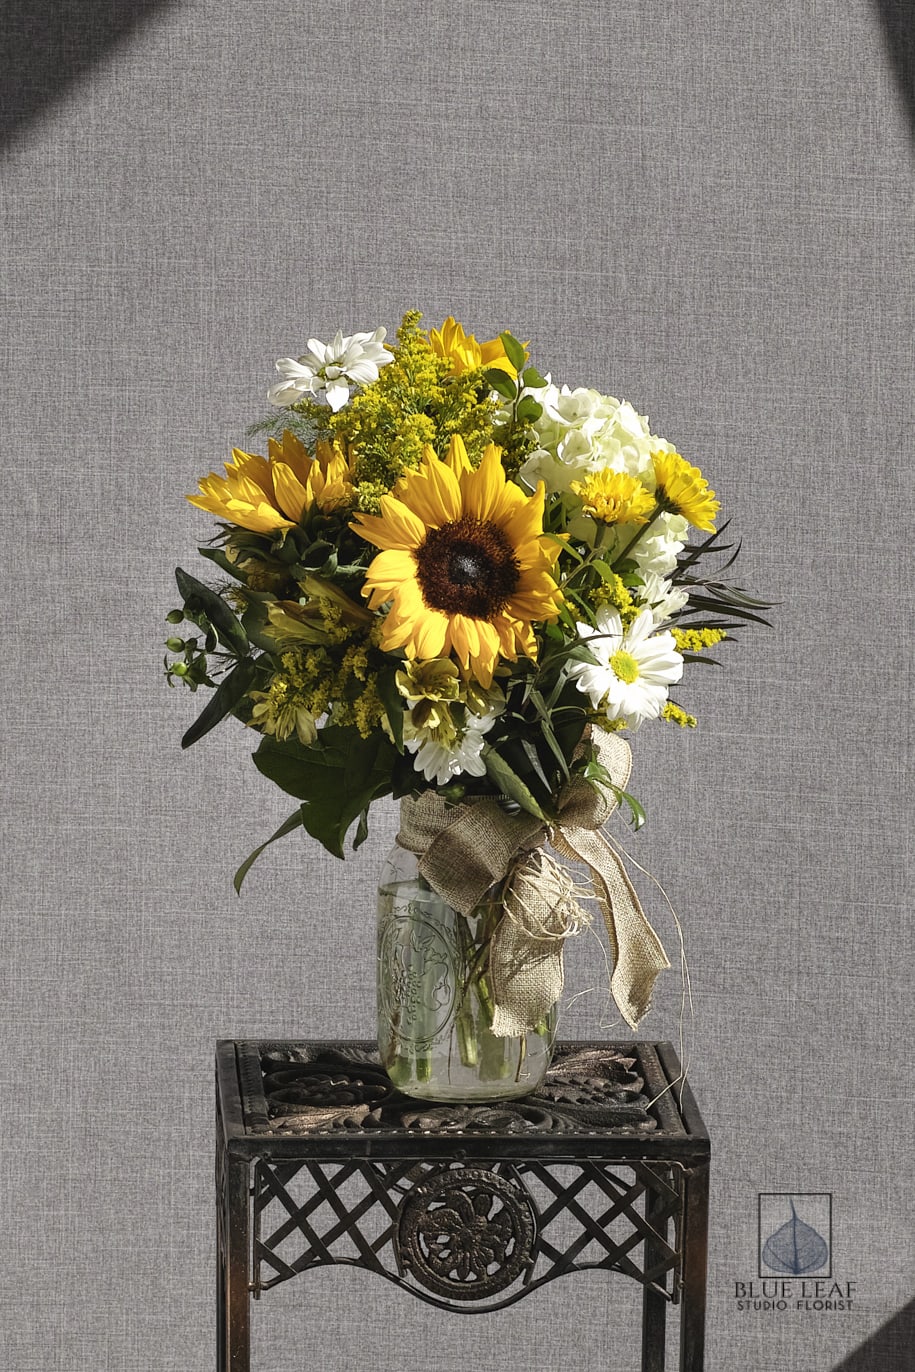 A cheerful mason jar arrangement of yellow sunflowers, white daisies, and white